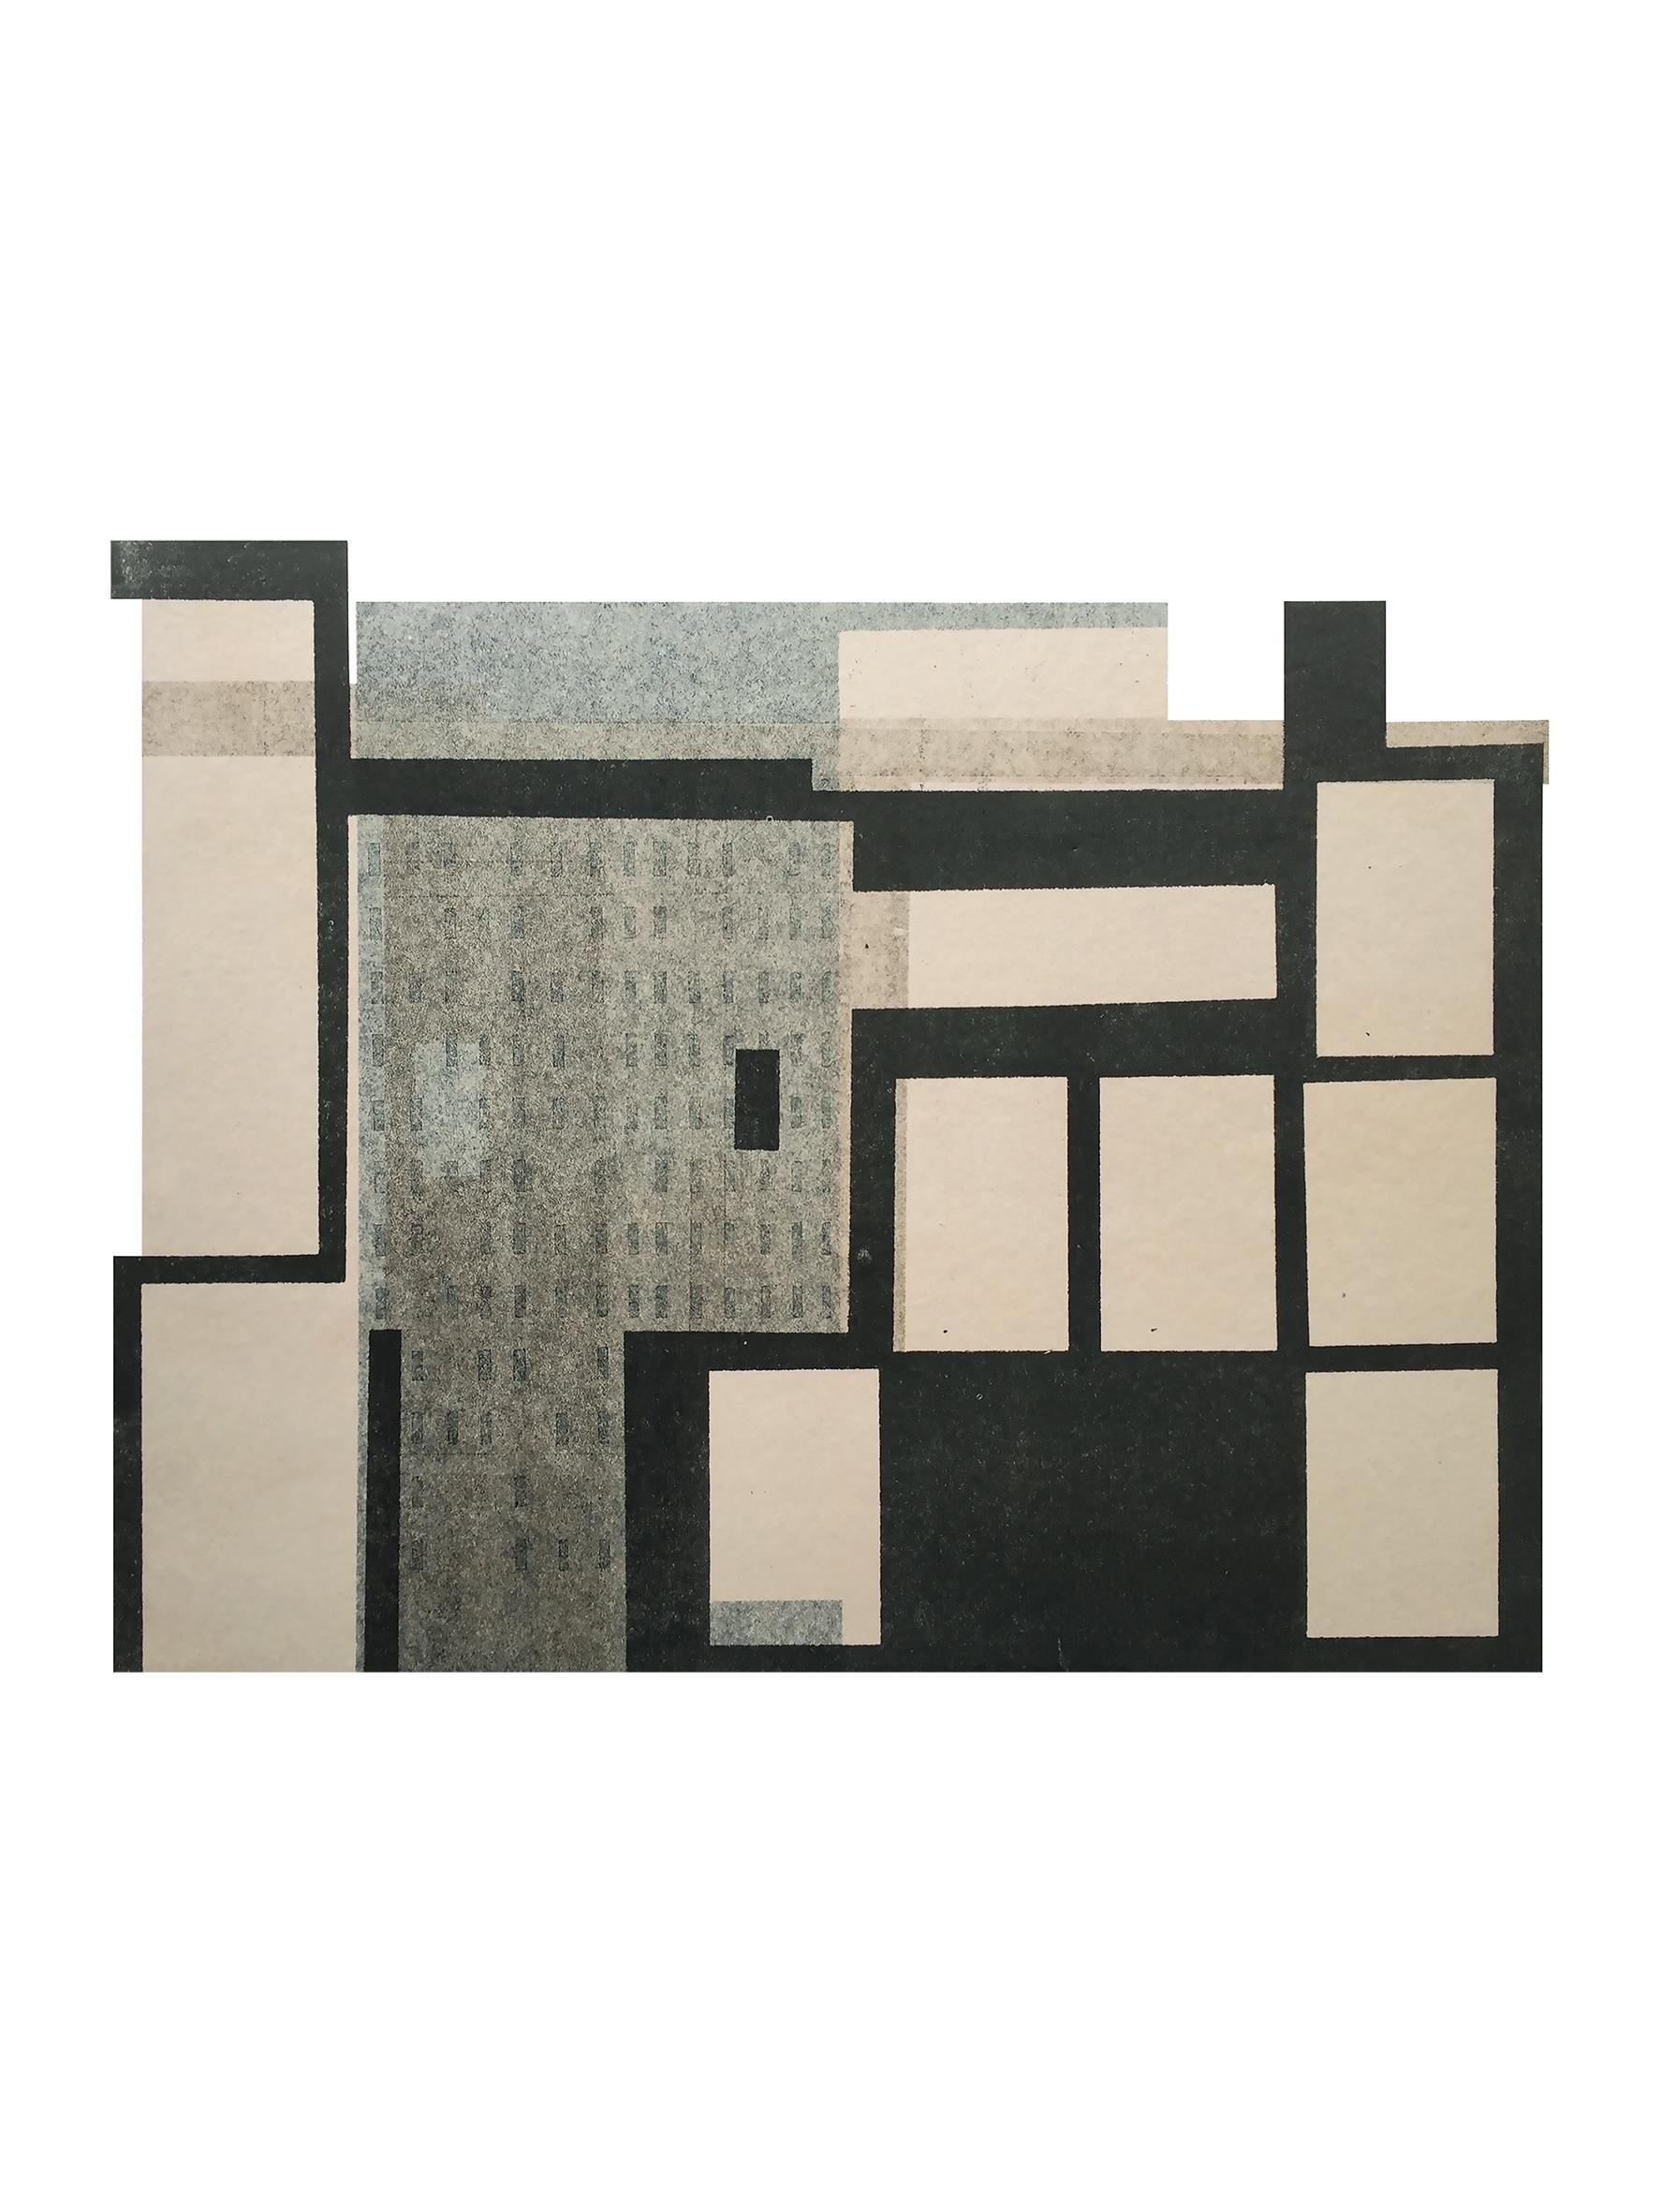 Agathe Bouton Abstract Print - Architecture IX: modernist urban architectural monoprint & collage in gray, ecru